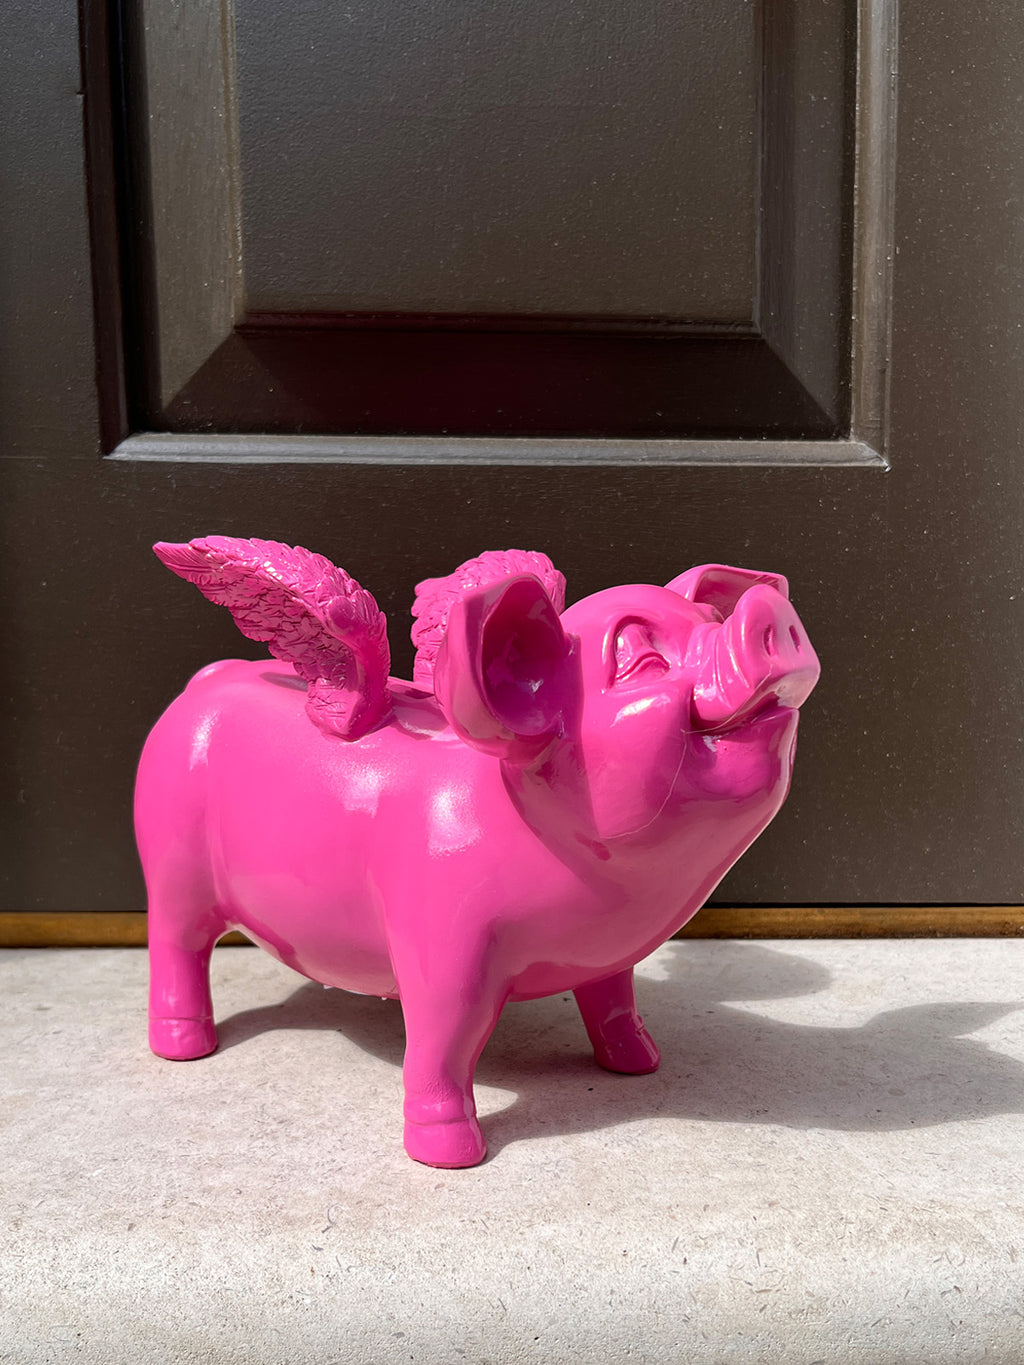 Flying Pig Money Box - Pig